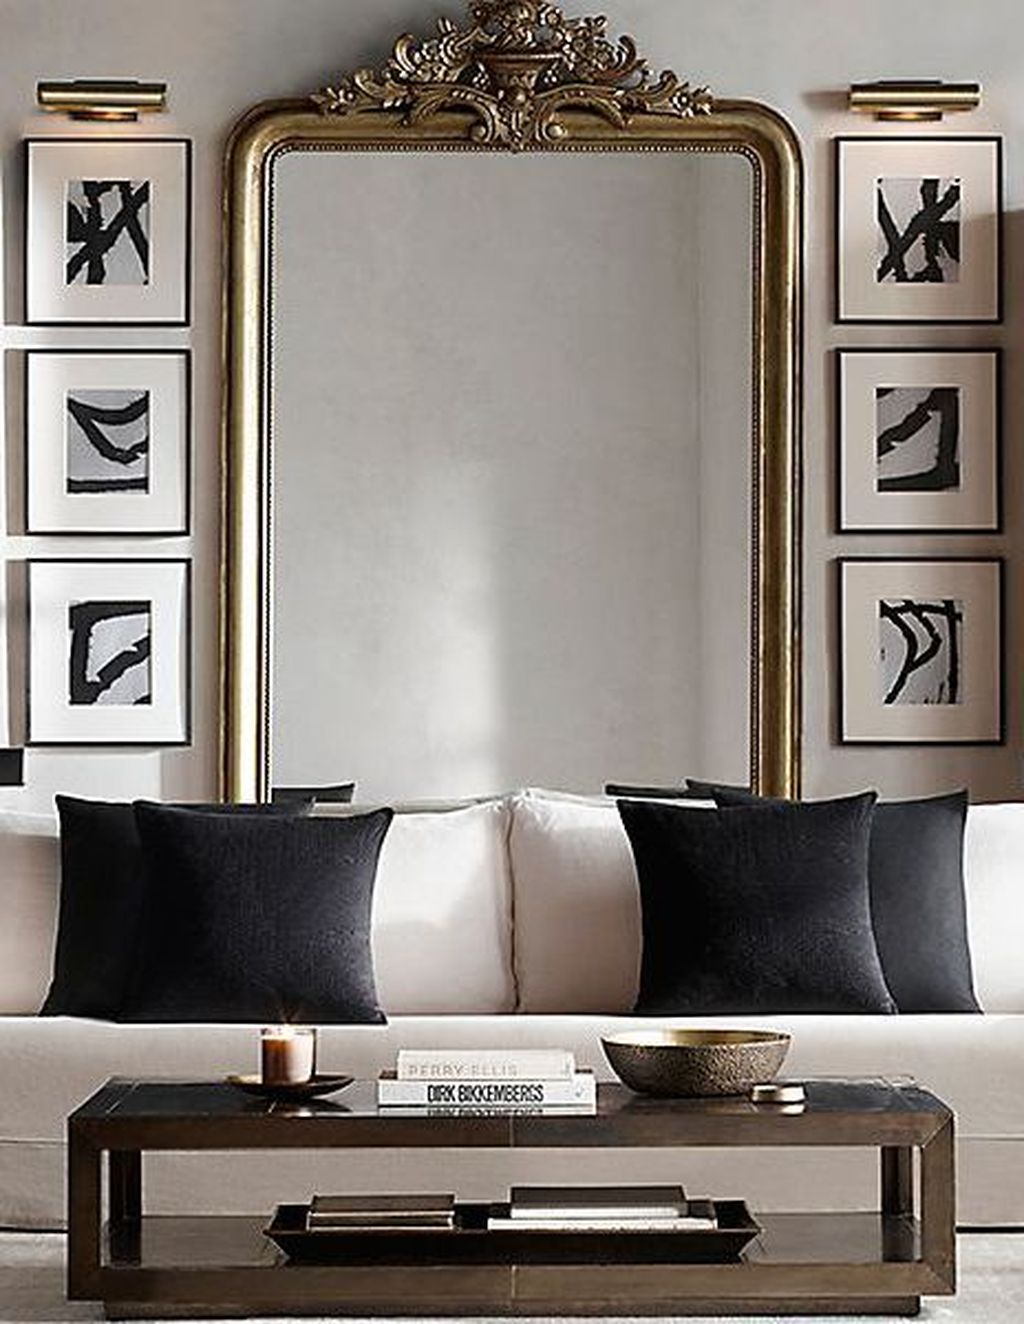 Mirror On Wall Ideas: Reflecting On Interior Design Possibilities